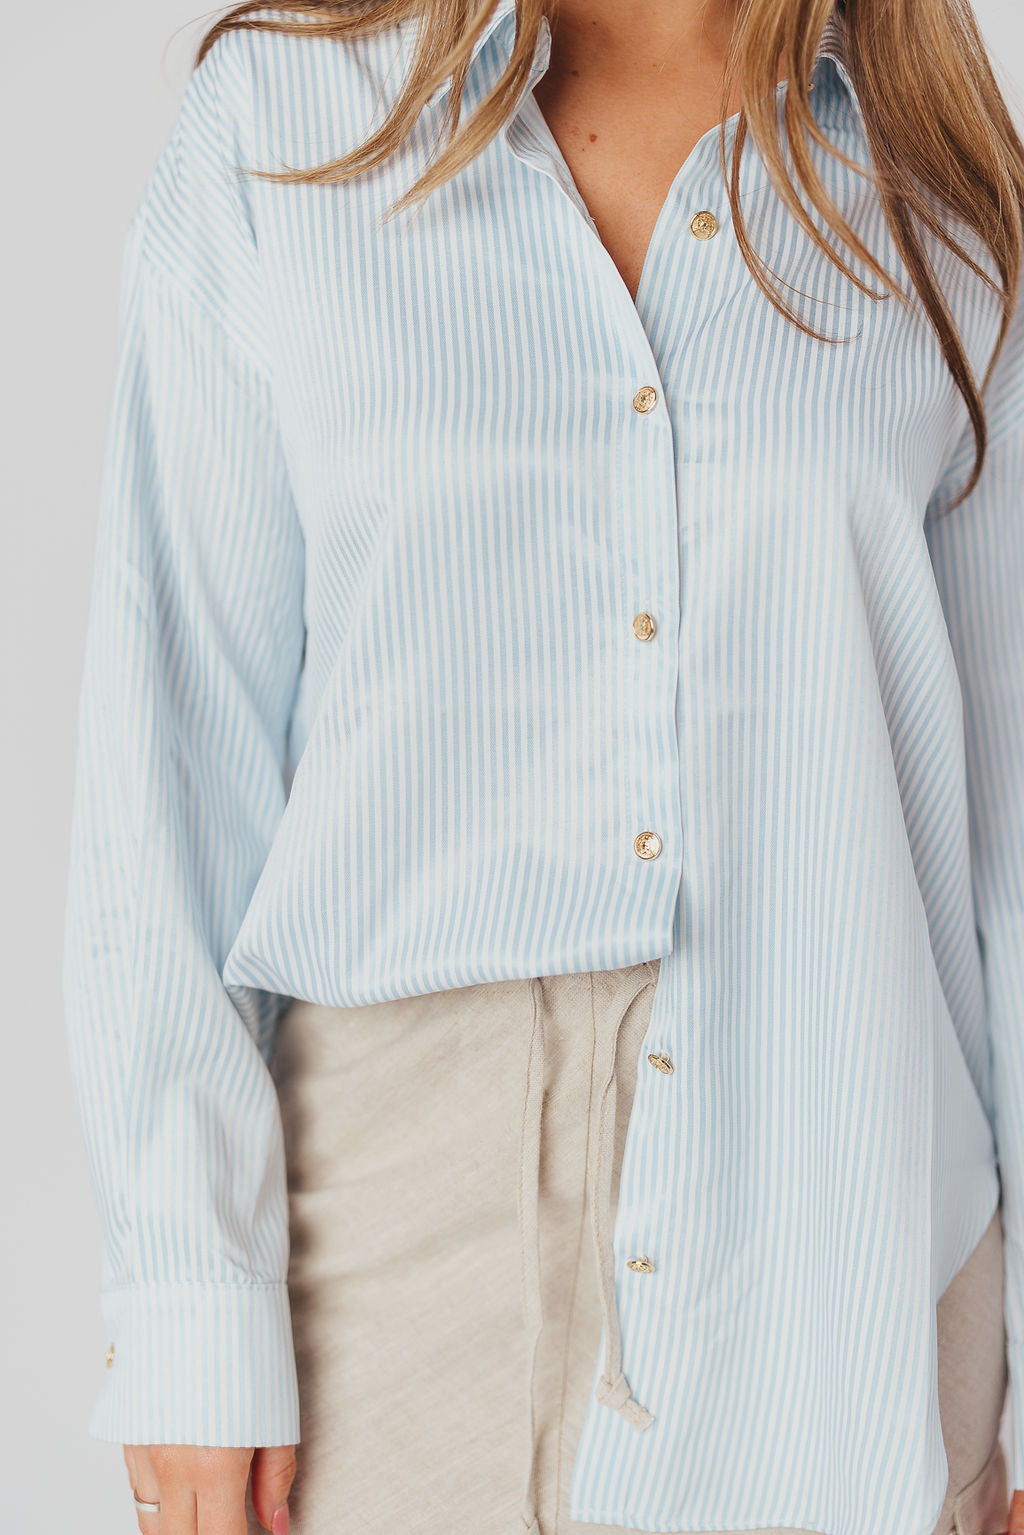 Lexie Striped Button-Up Shirt in Blue - Nursing Friendly